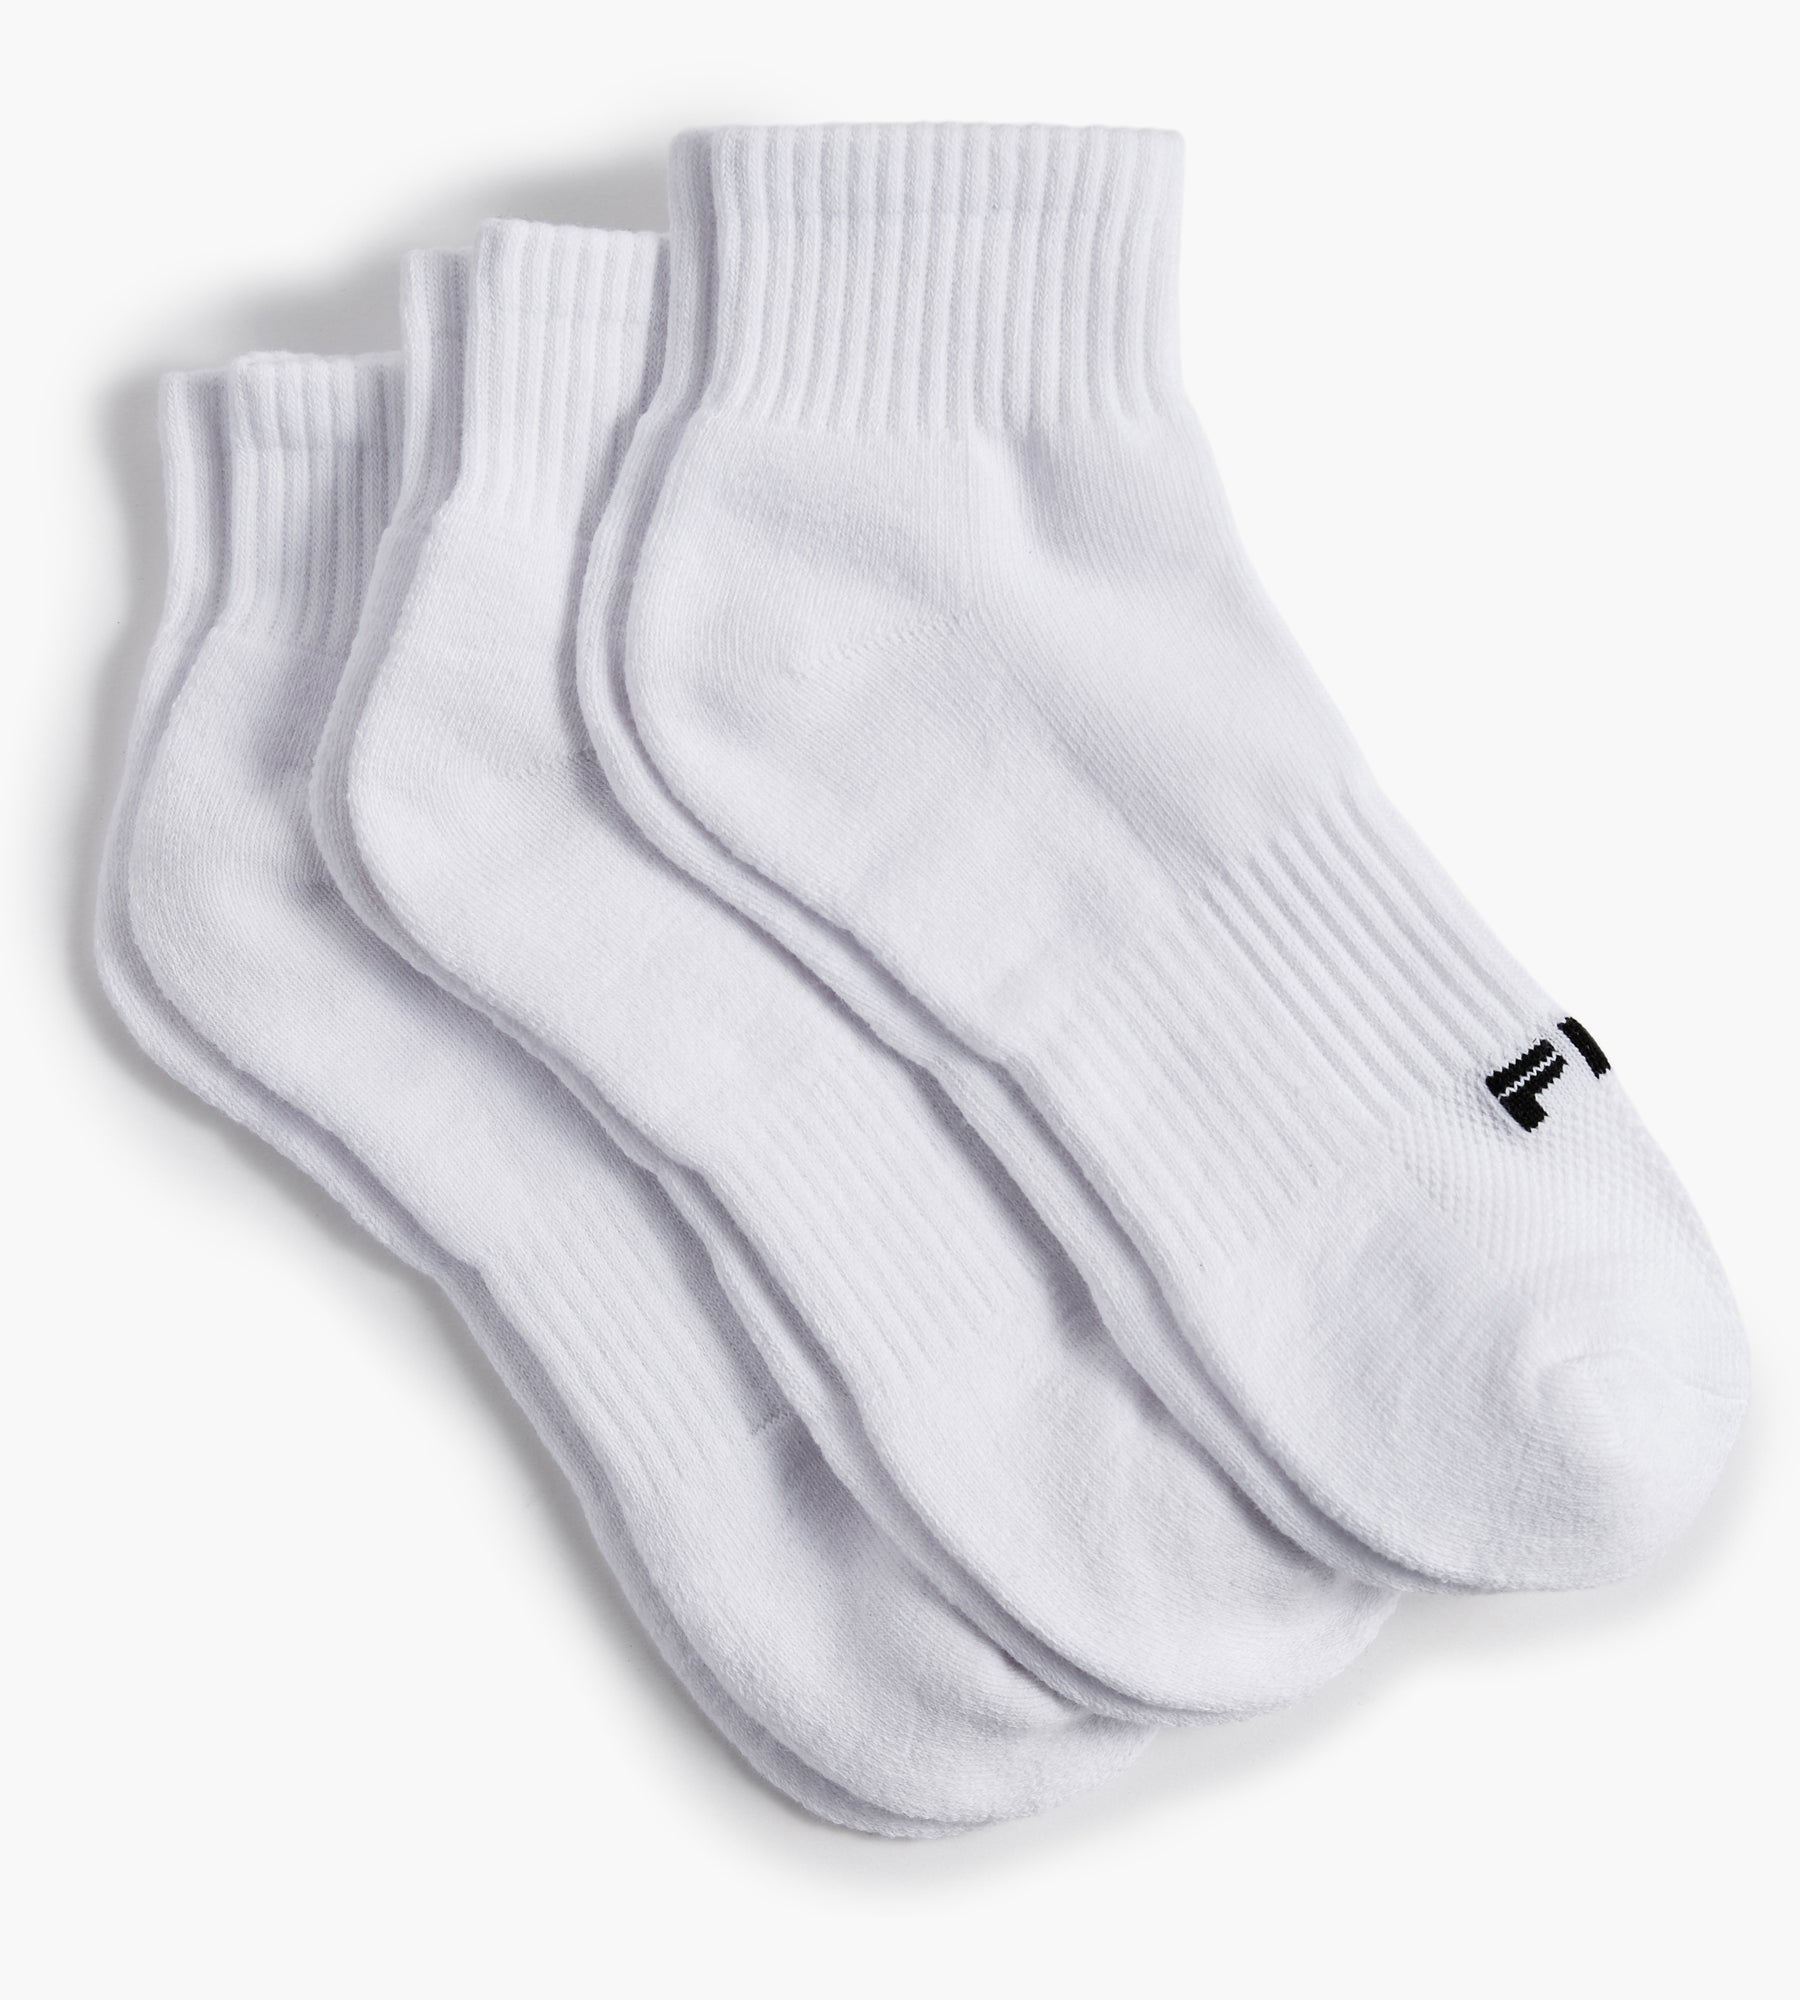 3 pairs of Performance Sport Socks – PASTE®